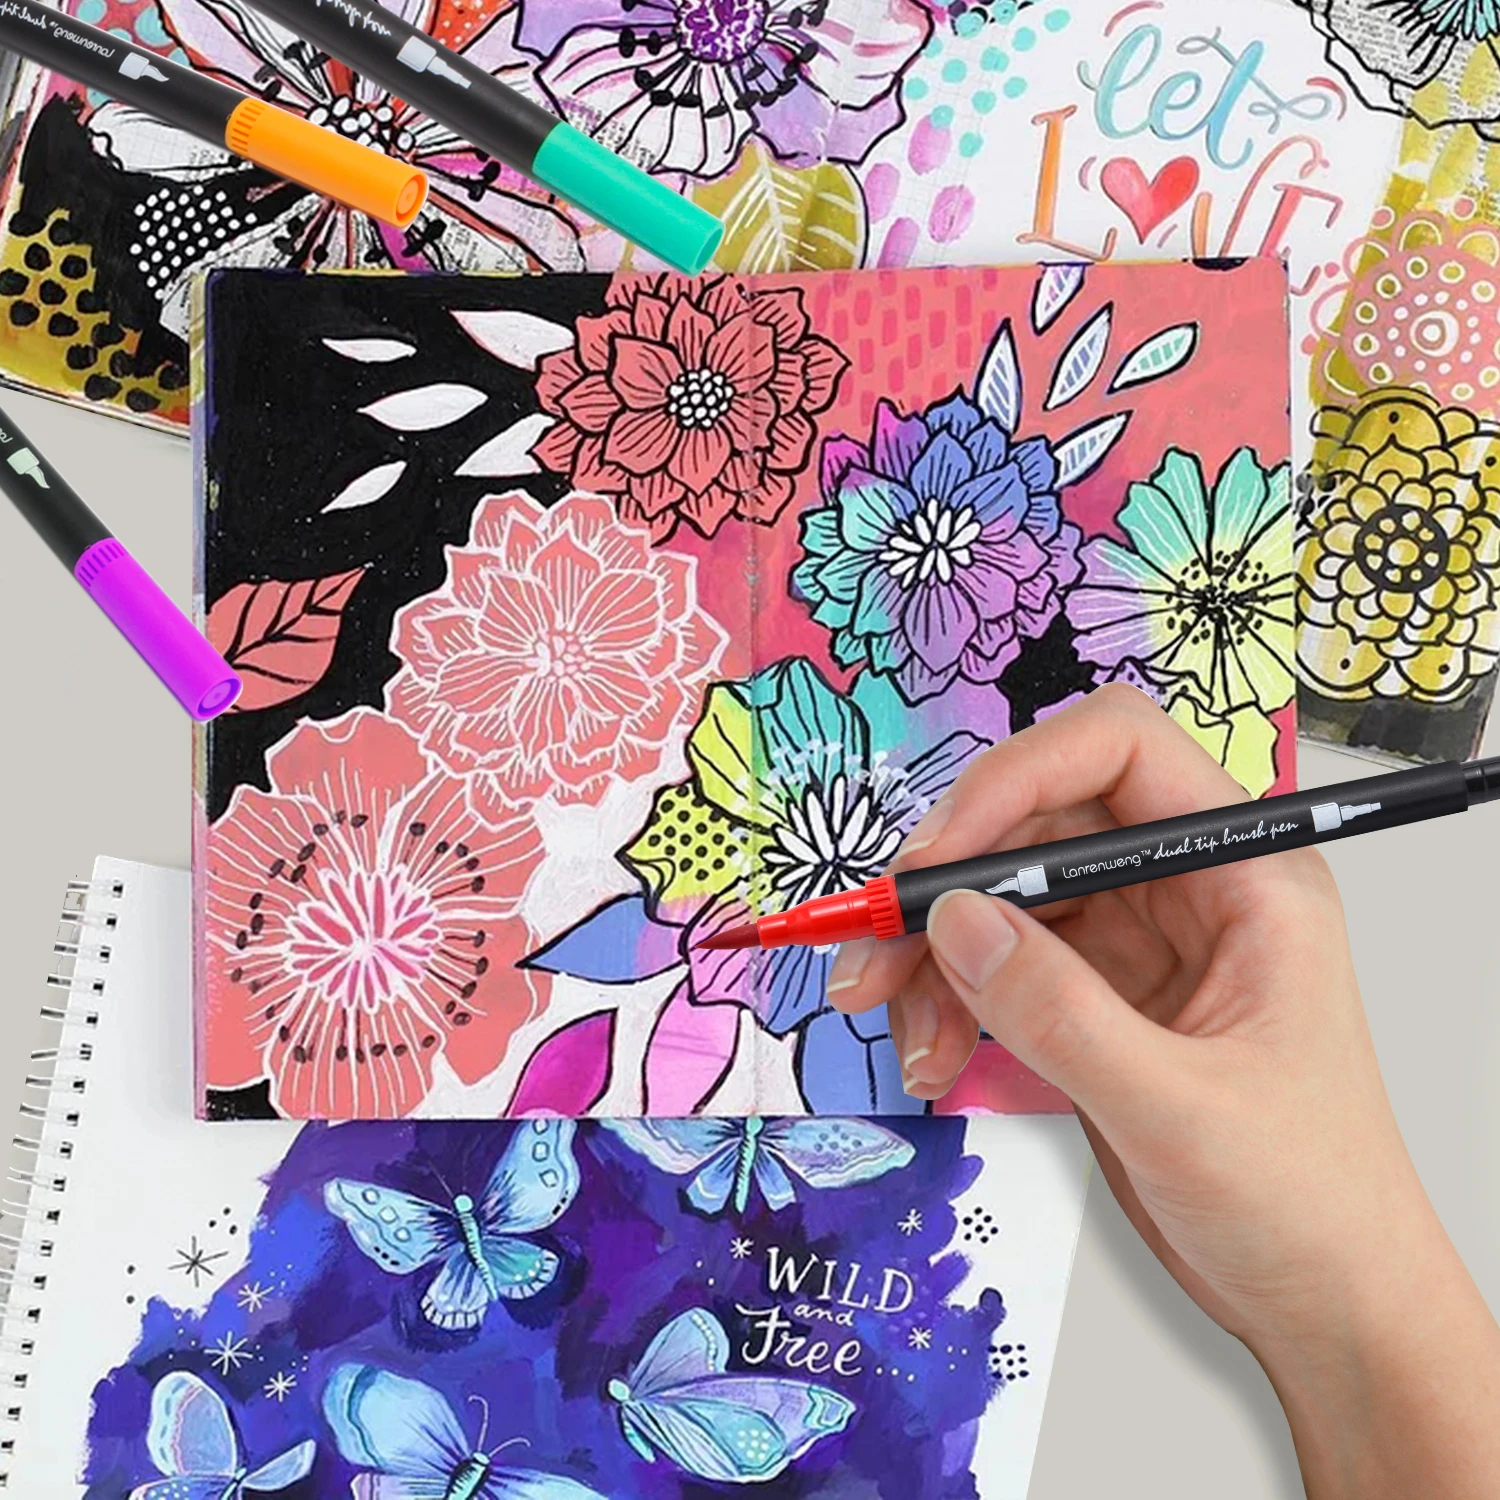 Coloring Markers Pen, Dual Brush Tip Marker for Adult Coloring, 34 Color  Calligraphy Fine Tip Pen for Beginner Journal Planner, Drawing, Doodle